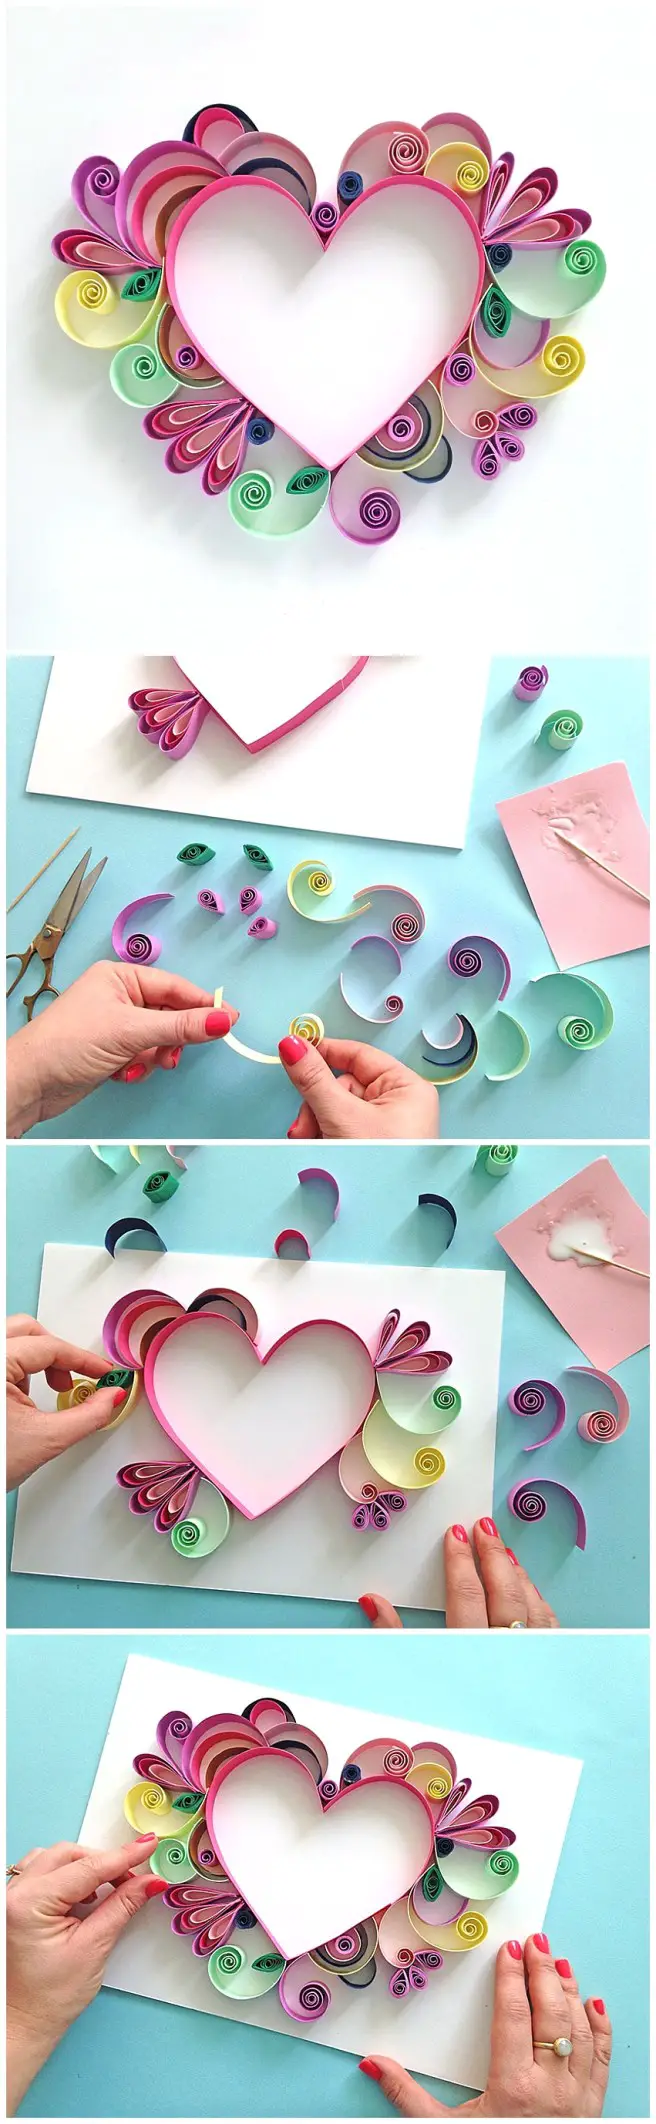 Heart Shaped DIY Paper Craft